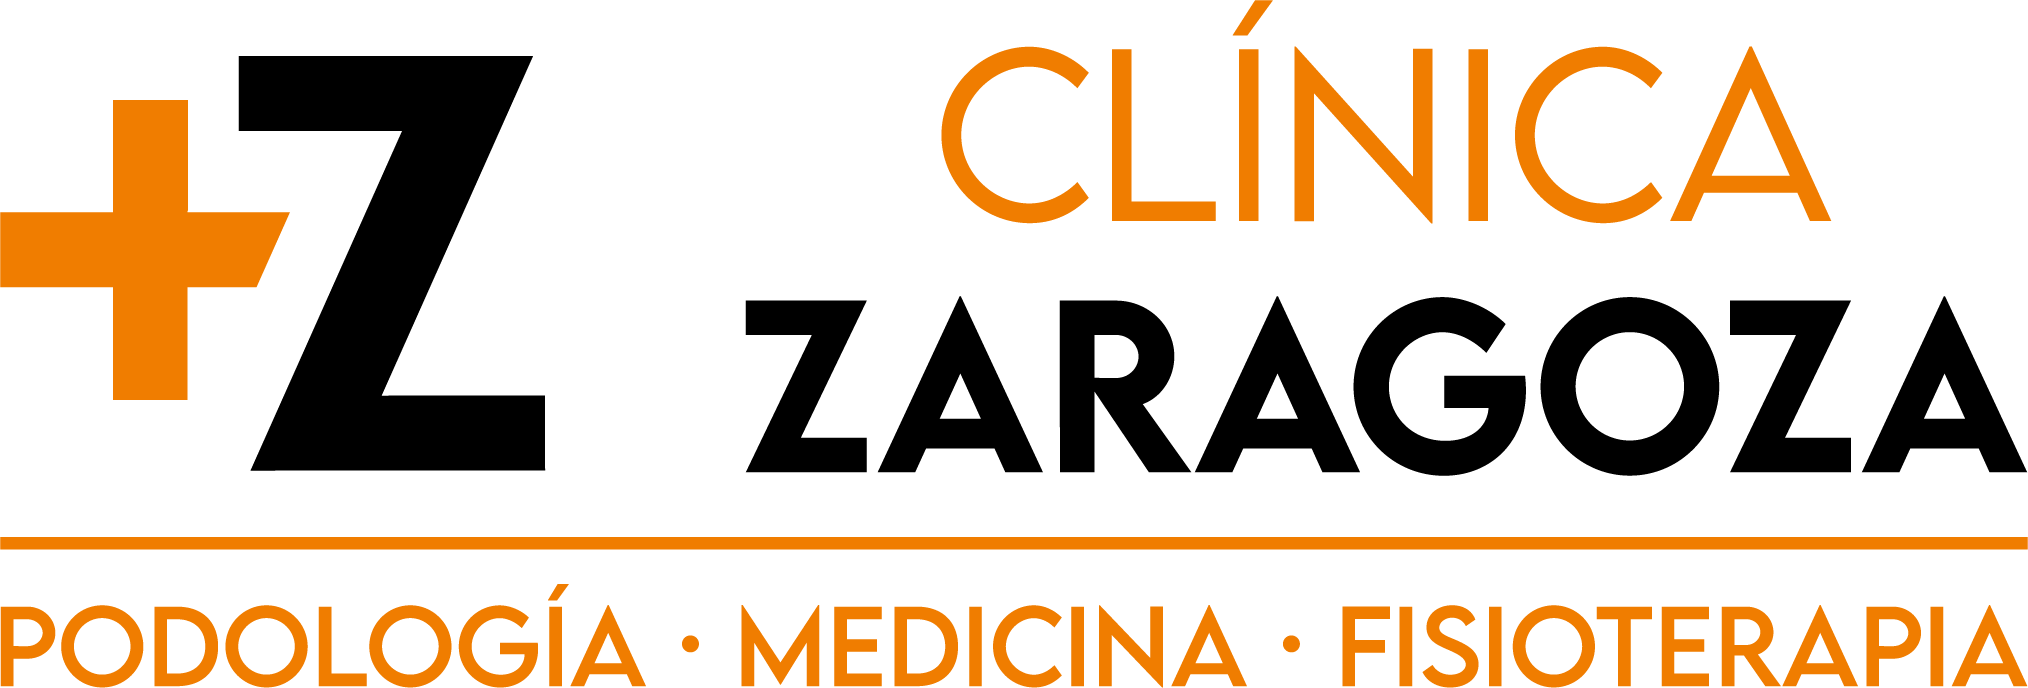 Z clinica Zaragoza logo